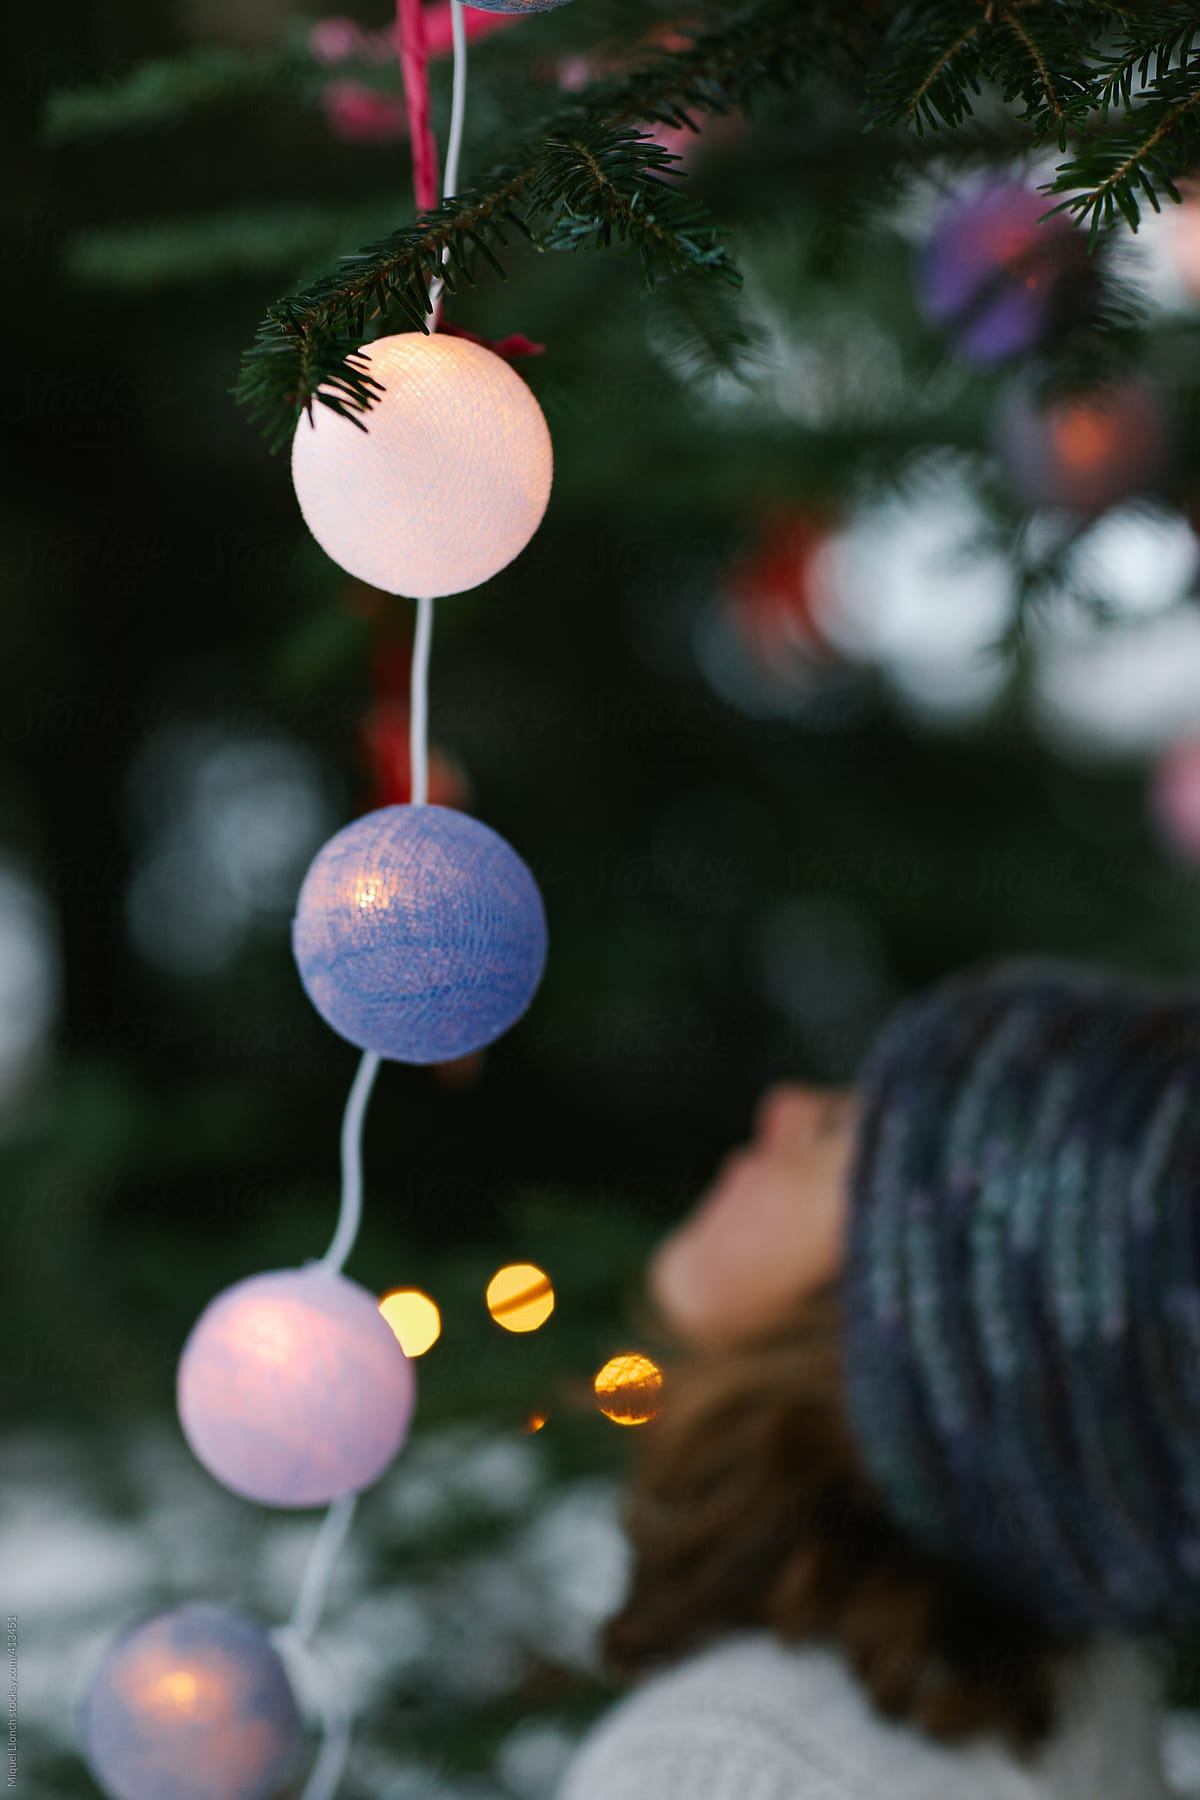 Little child and Christmas tree lit balls